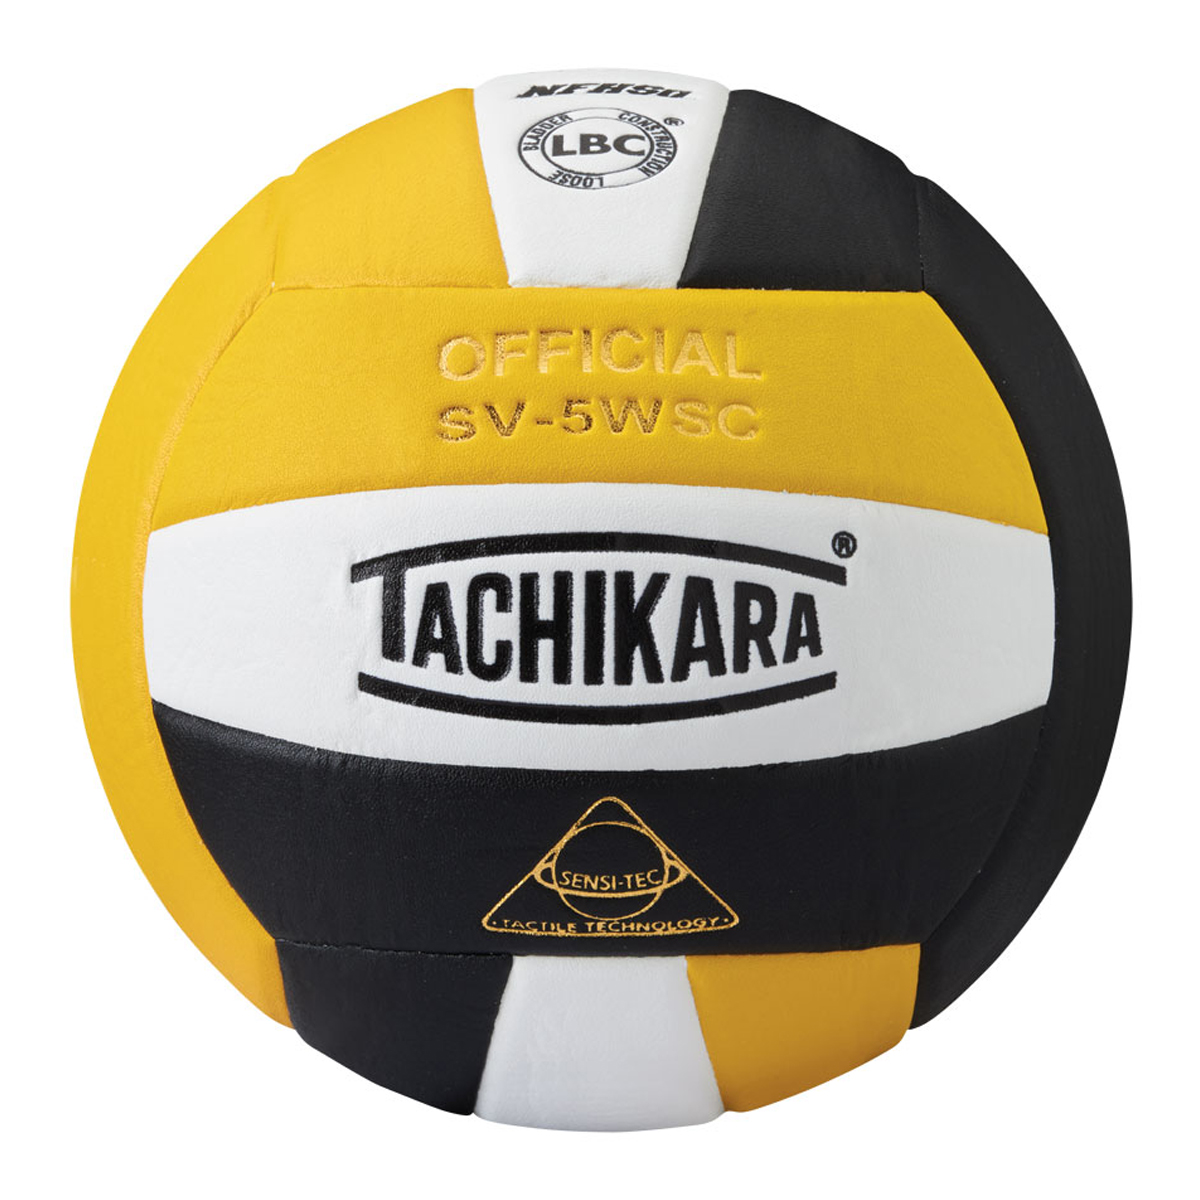 Tachikara SV5WSC Composite Volleyball-Gold, Black & White